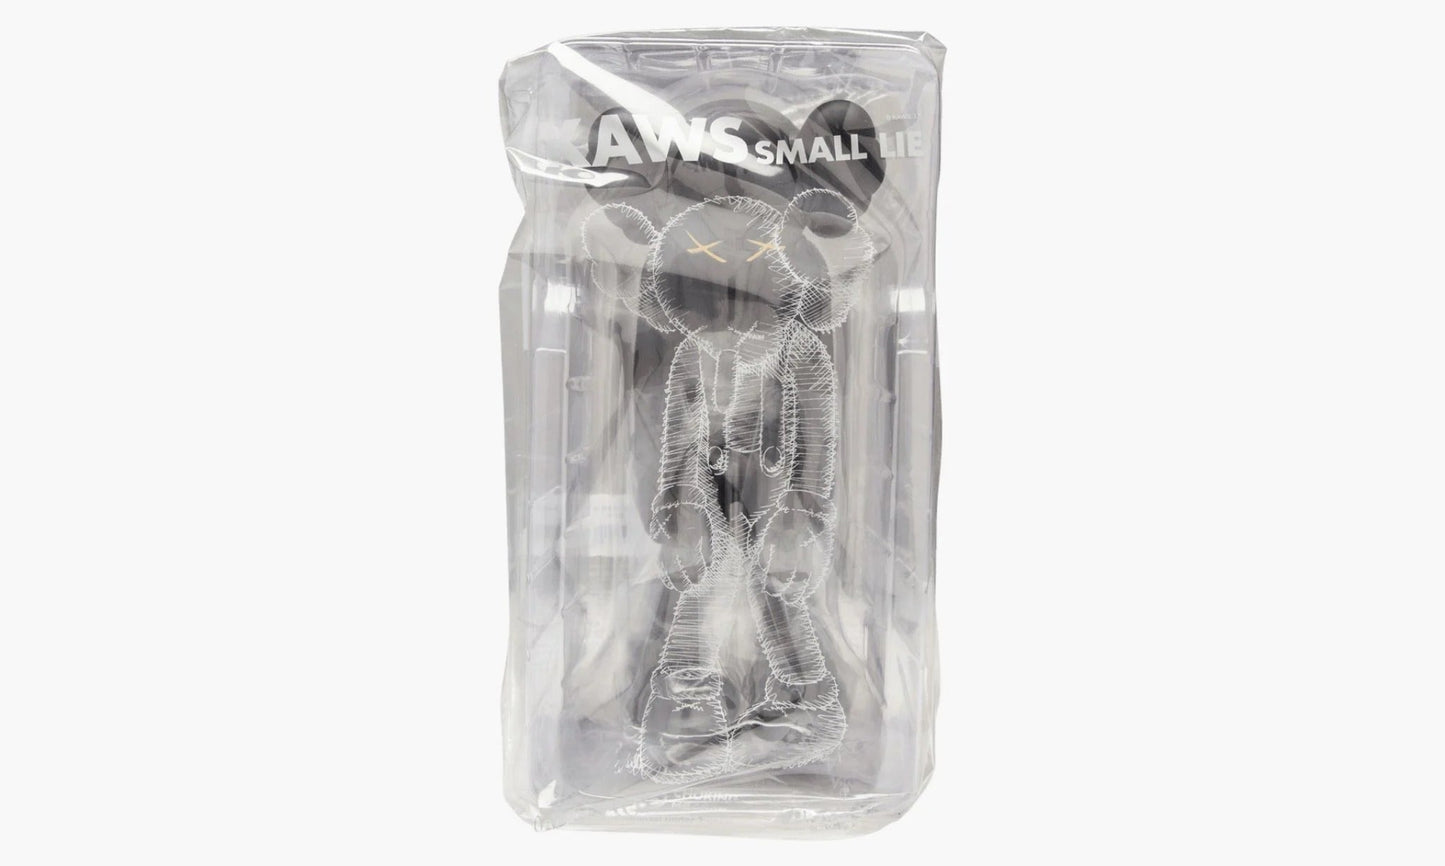 KAWS Small Lie Companion Vinyl Figure Black | The Sortage